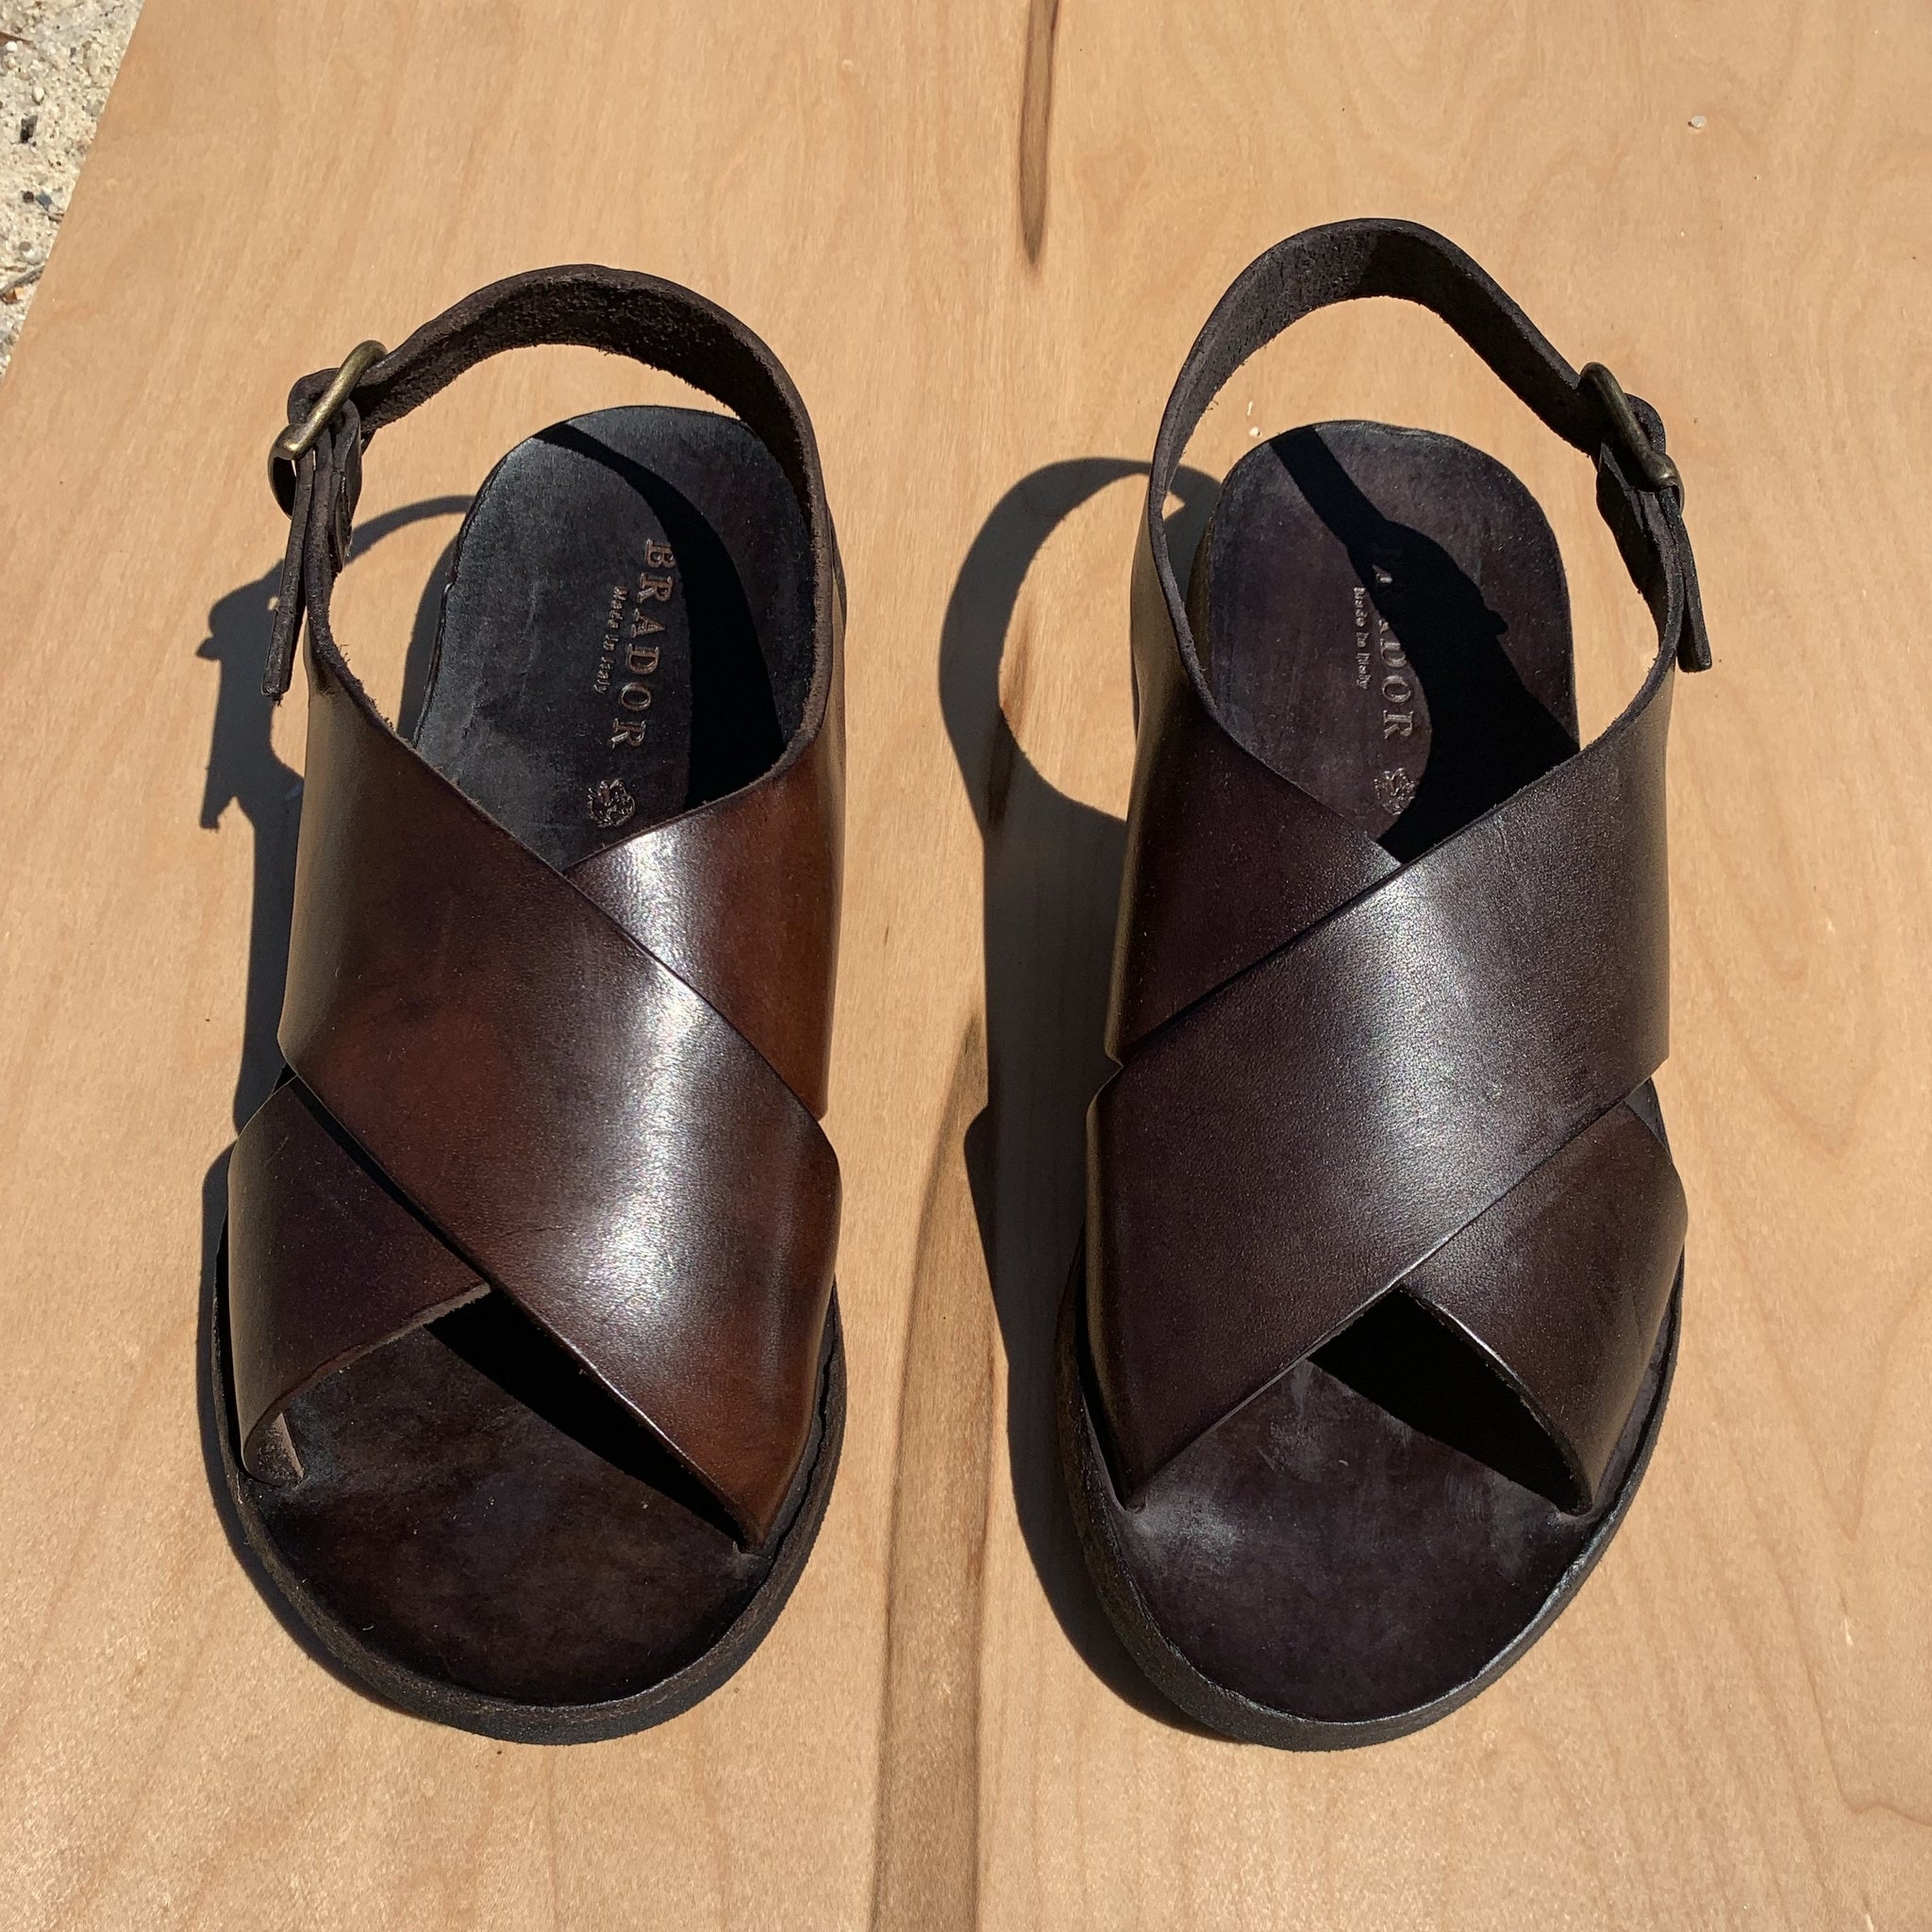 Brador Crossover Sandal size 37